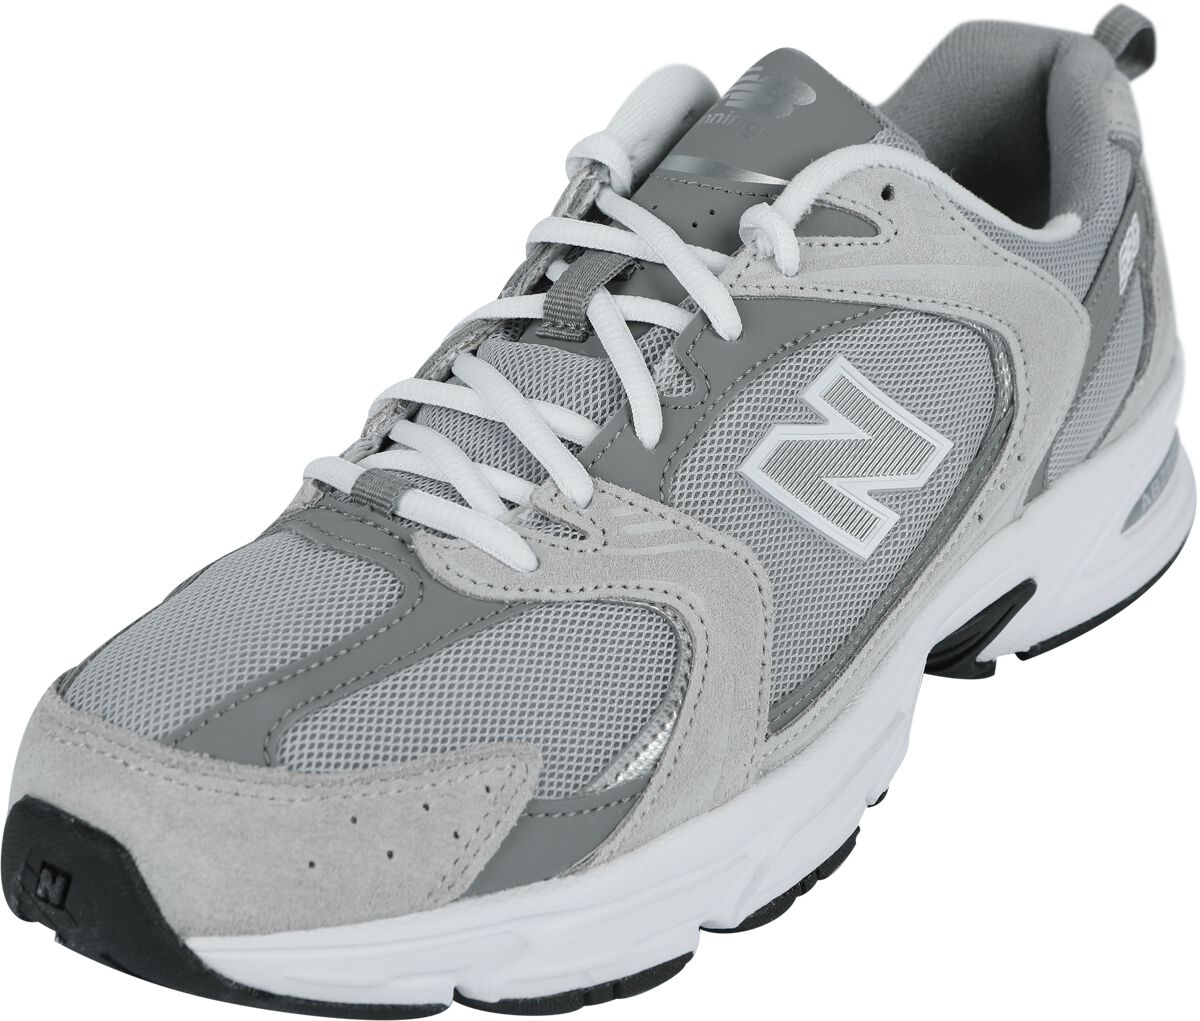 New Balance Sneaker - 530 - EU41 bis 5 - für Männer - Größe EU41,5 - grau